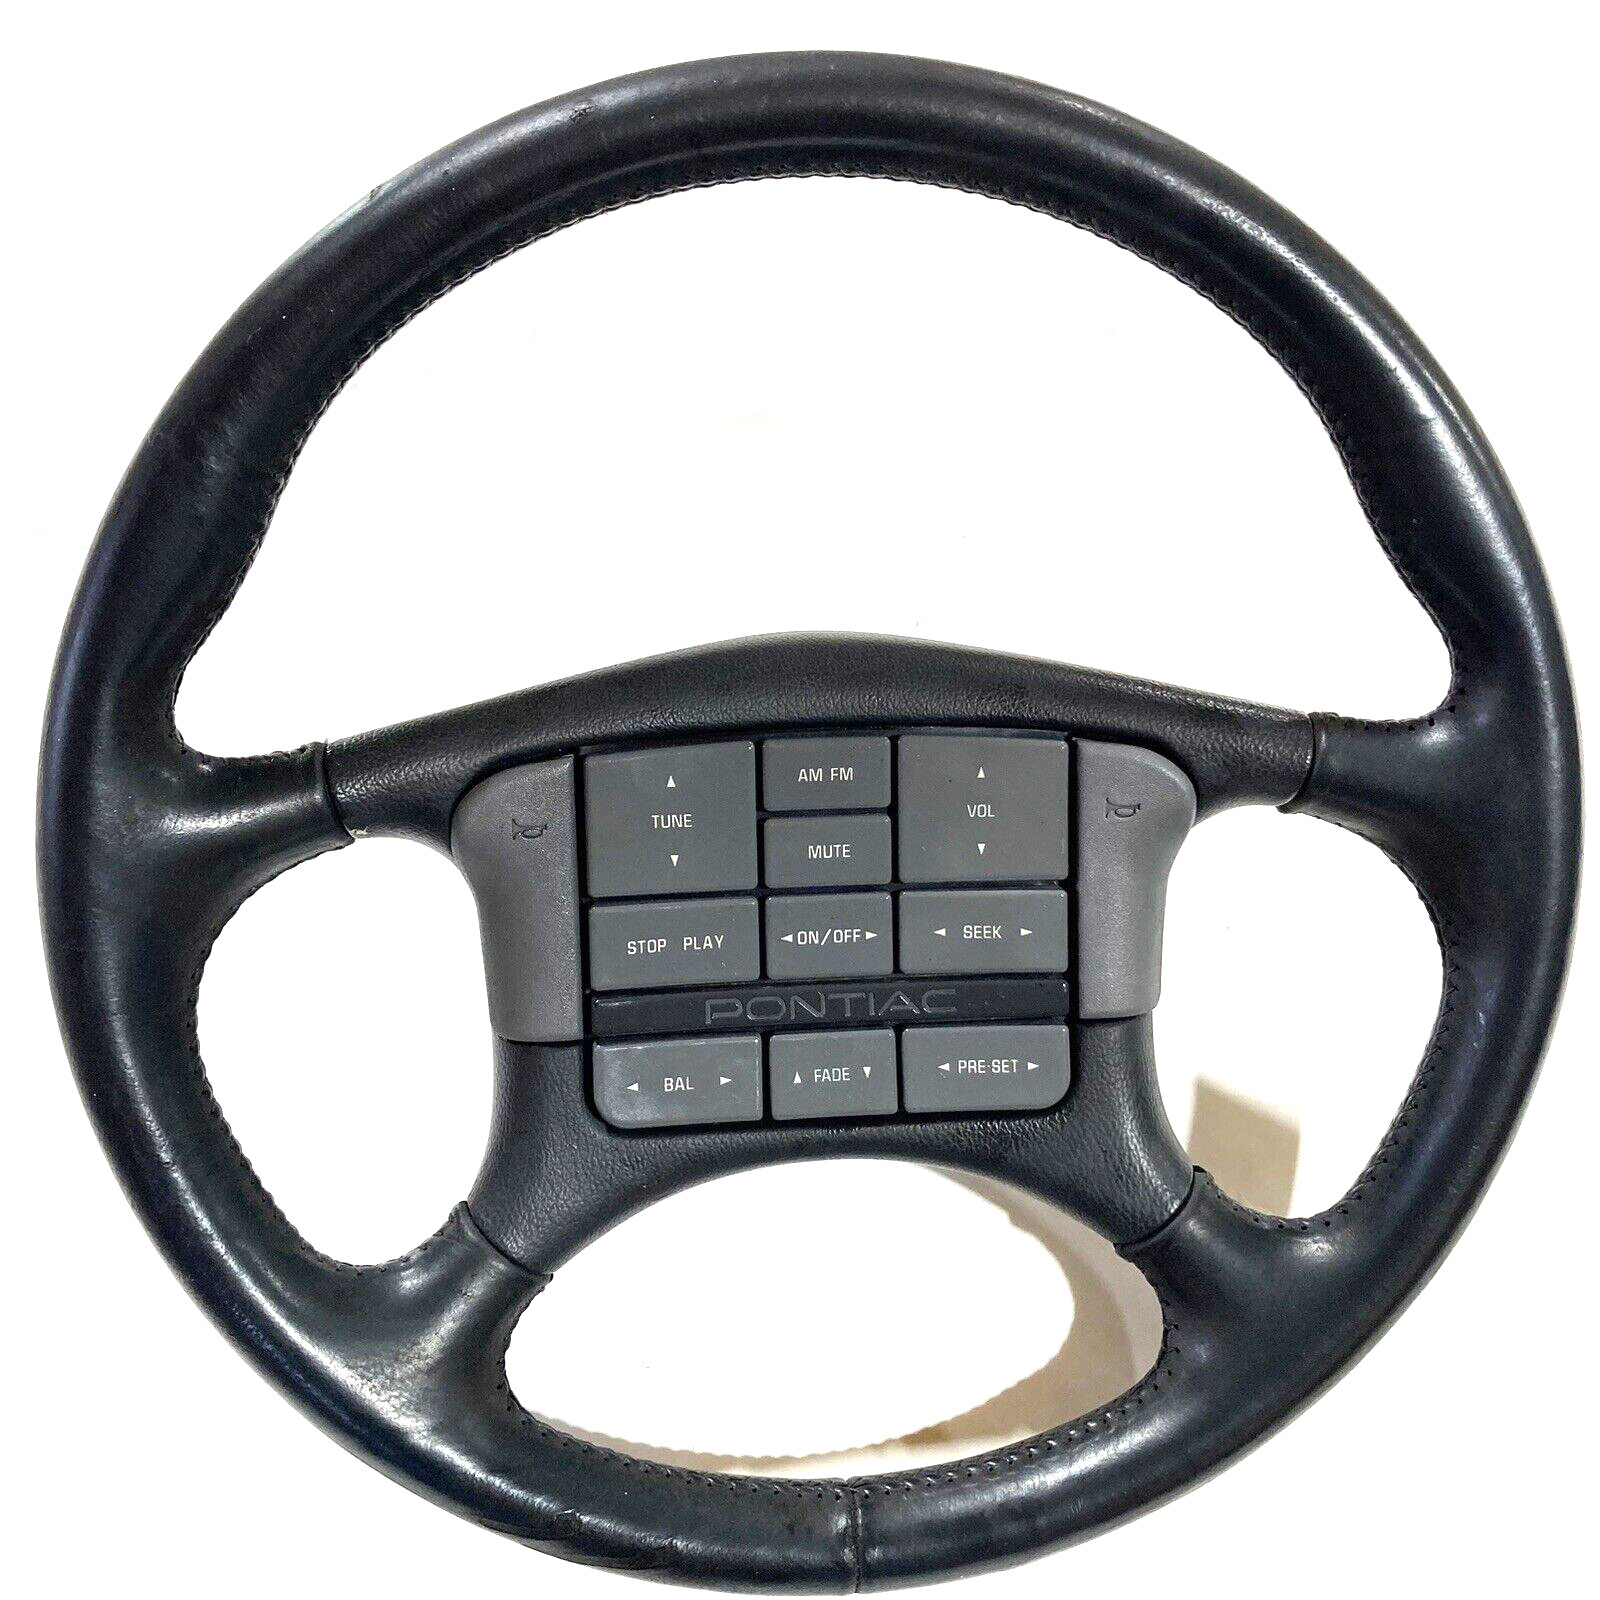 1985-1995 Pontiac steering wheel (Grand Prix, 6000, Bonneville) original OEM